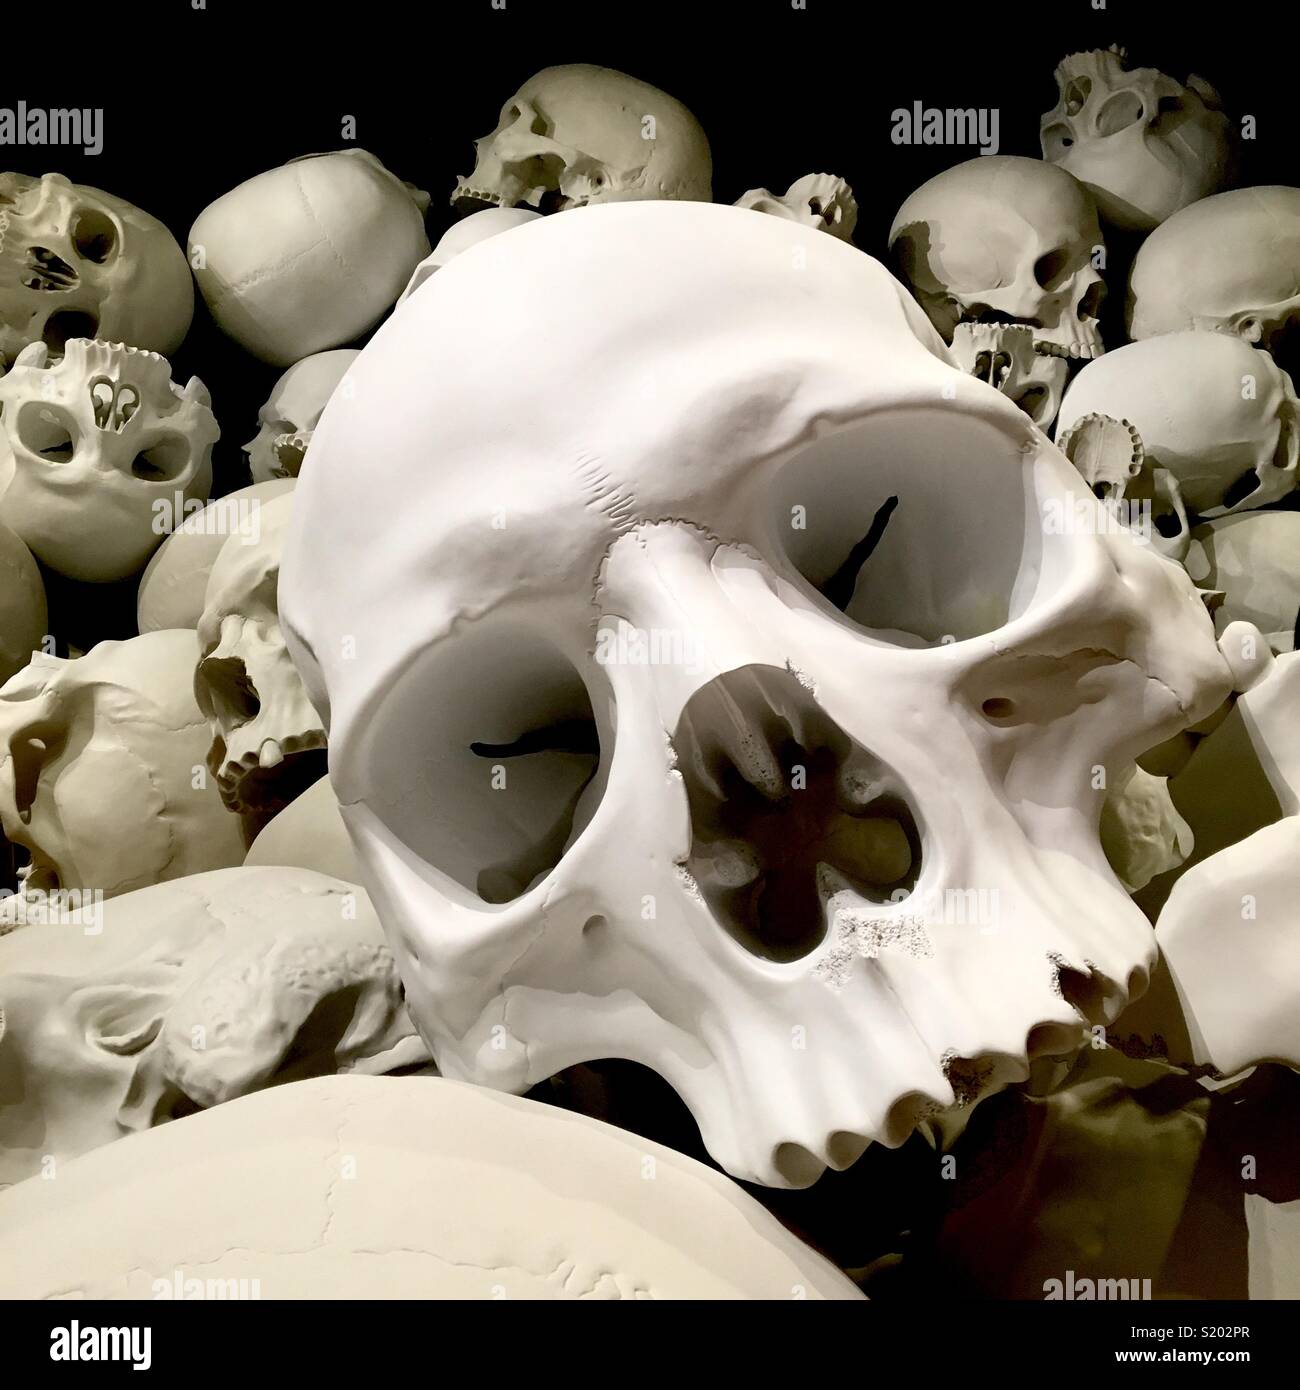 Art installation of human skulls piled up Stock Photo